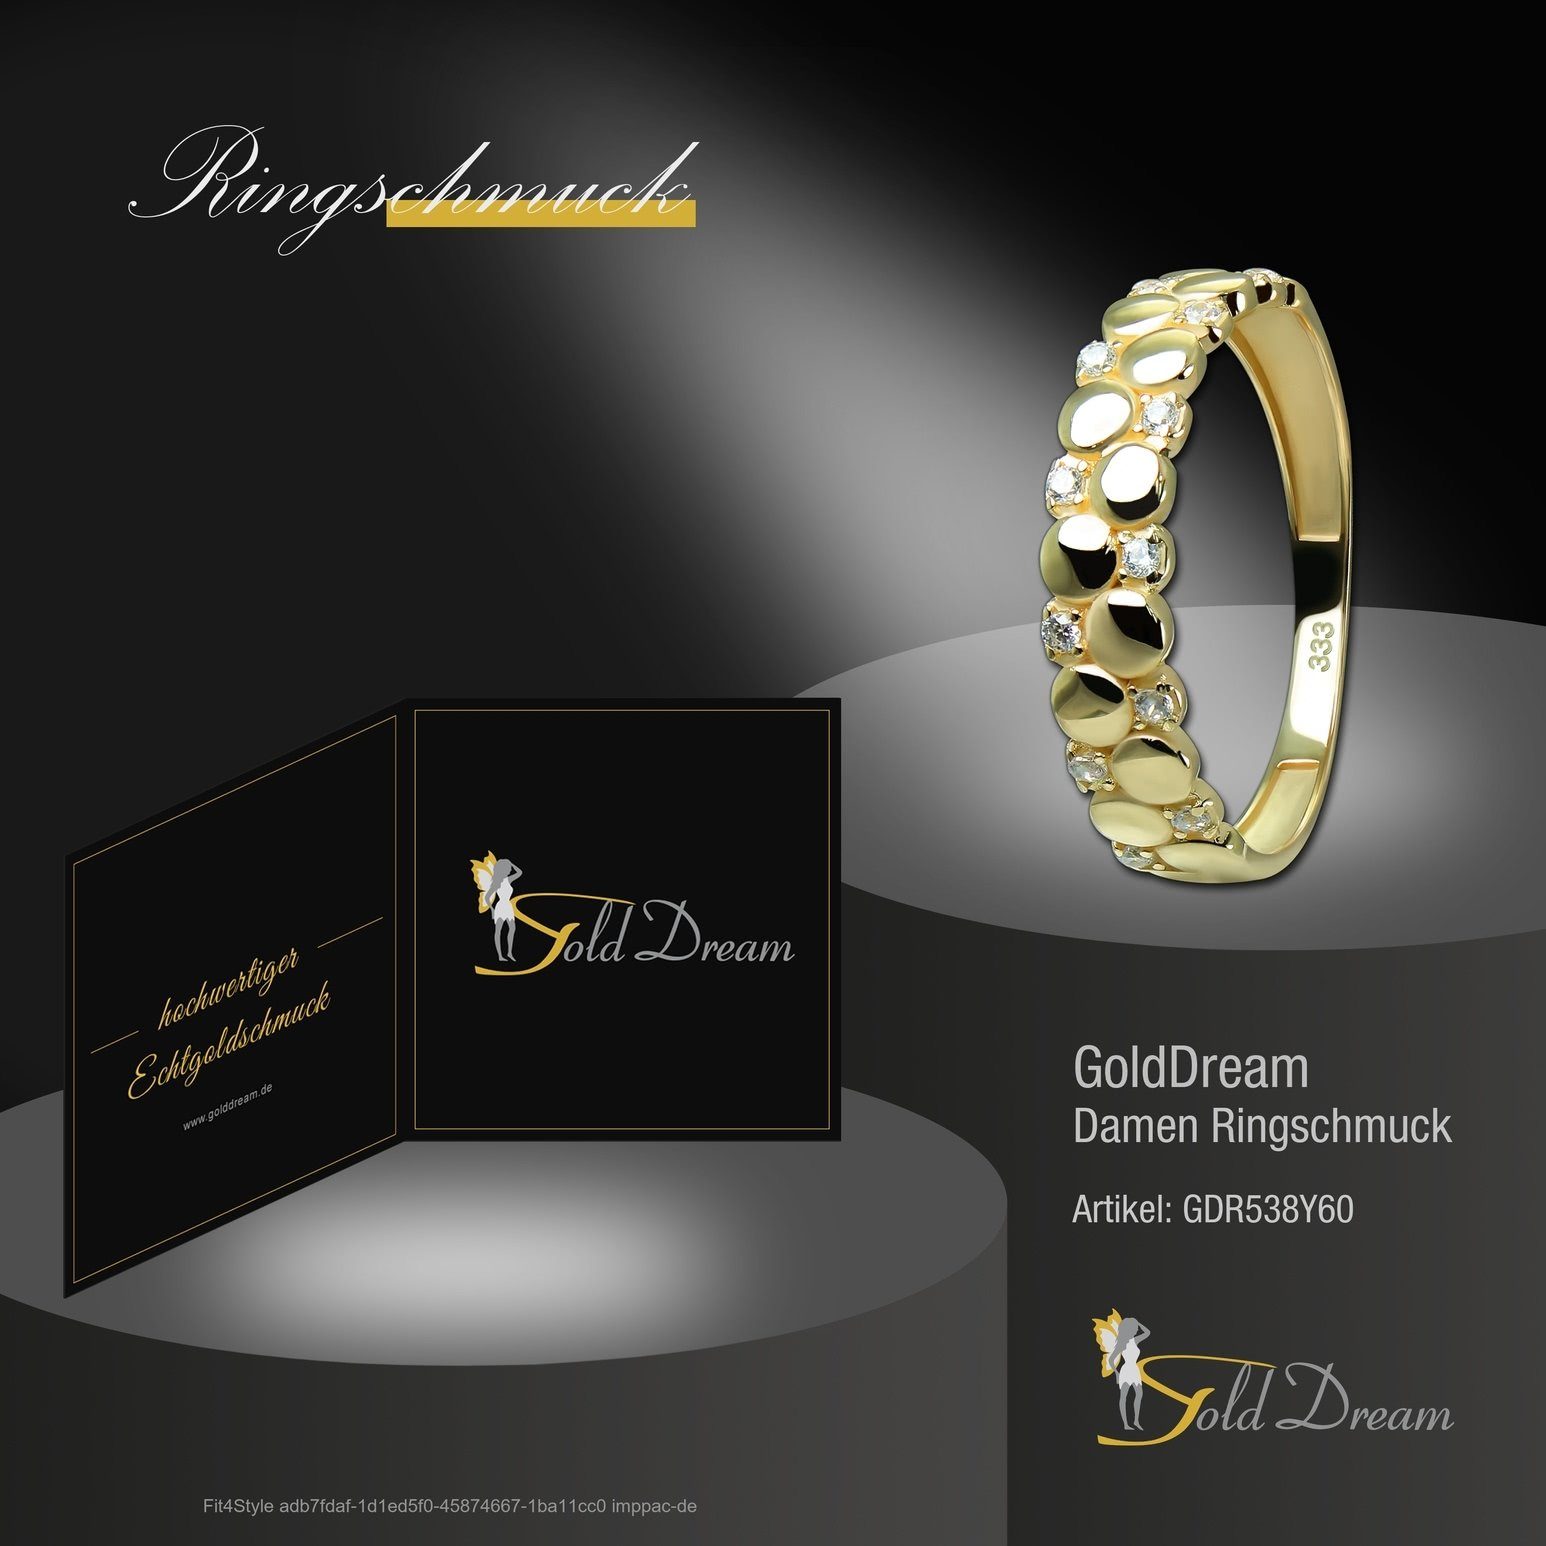 GoldDream Goldring GoldDream Farbe: Ring (Fingerring), Ring Gelbgold gold, Damen Zirkonia 8 weiß Dots Gr.60 333 Dots - Gold Karat